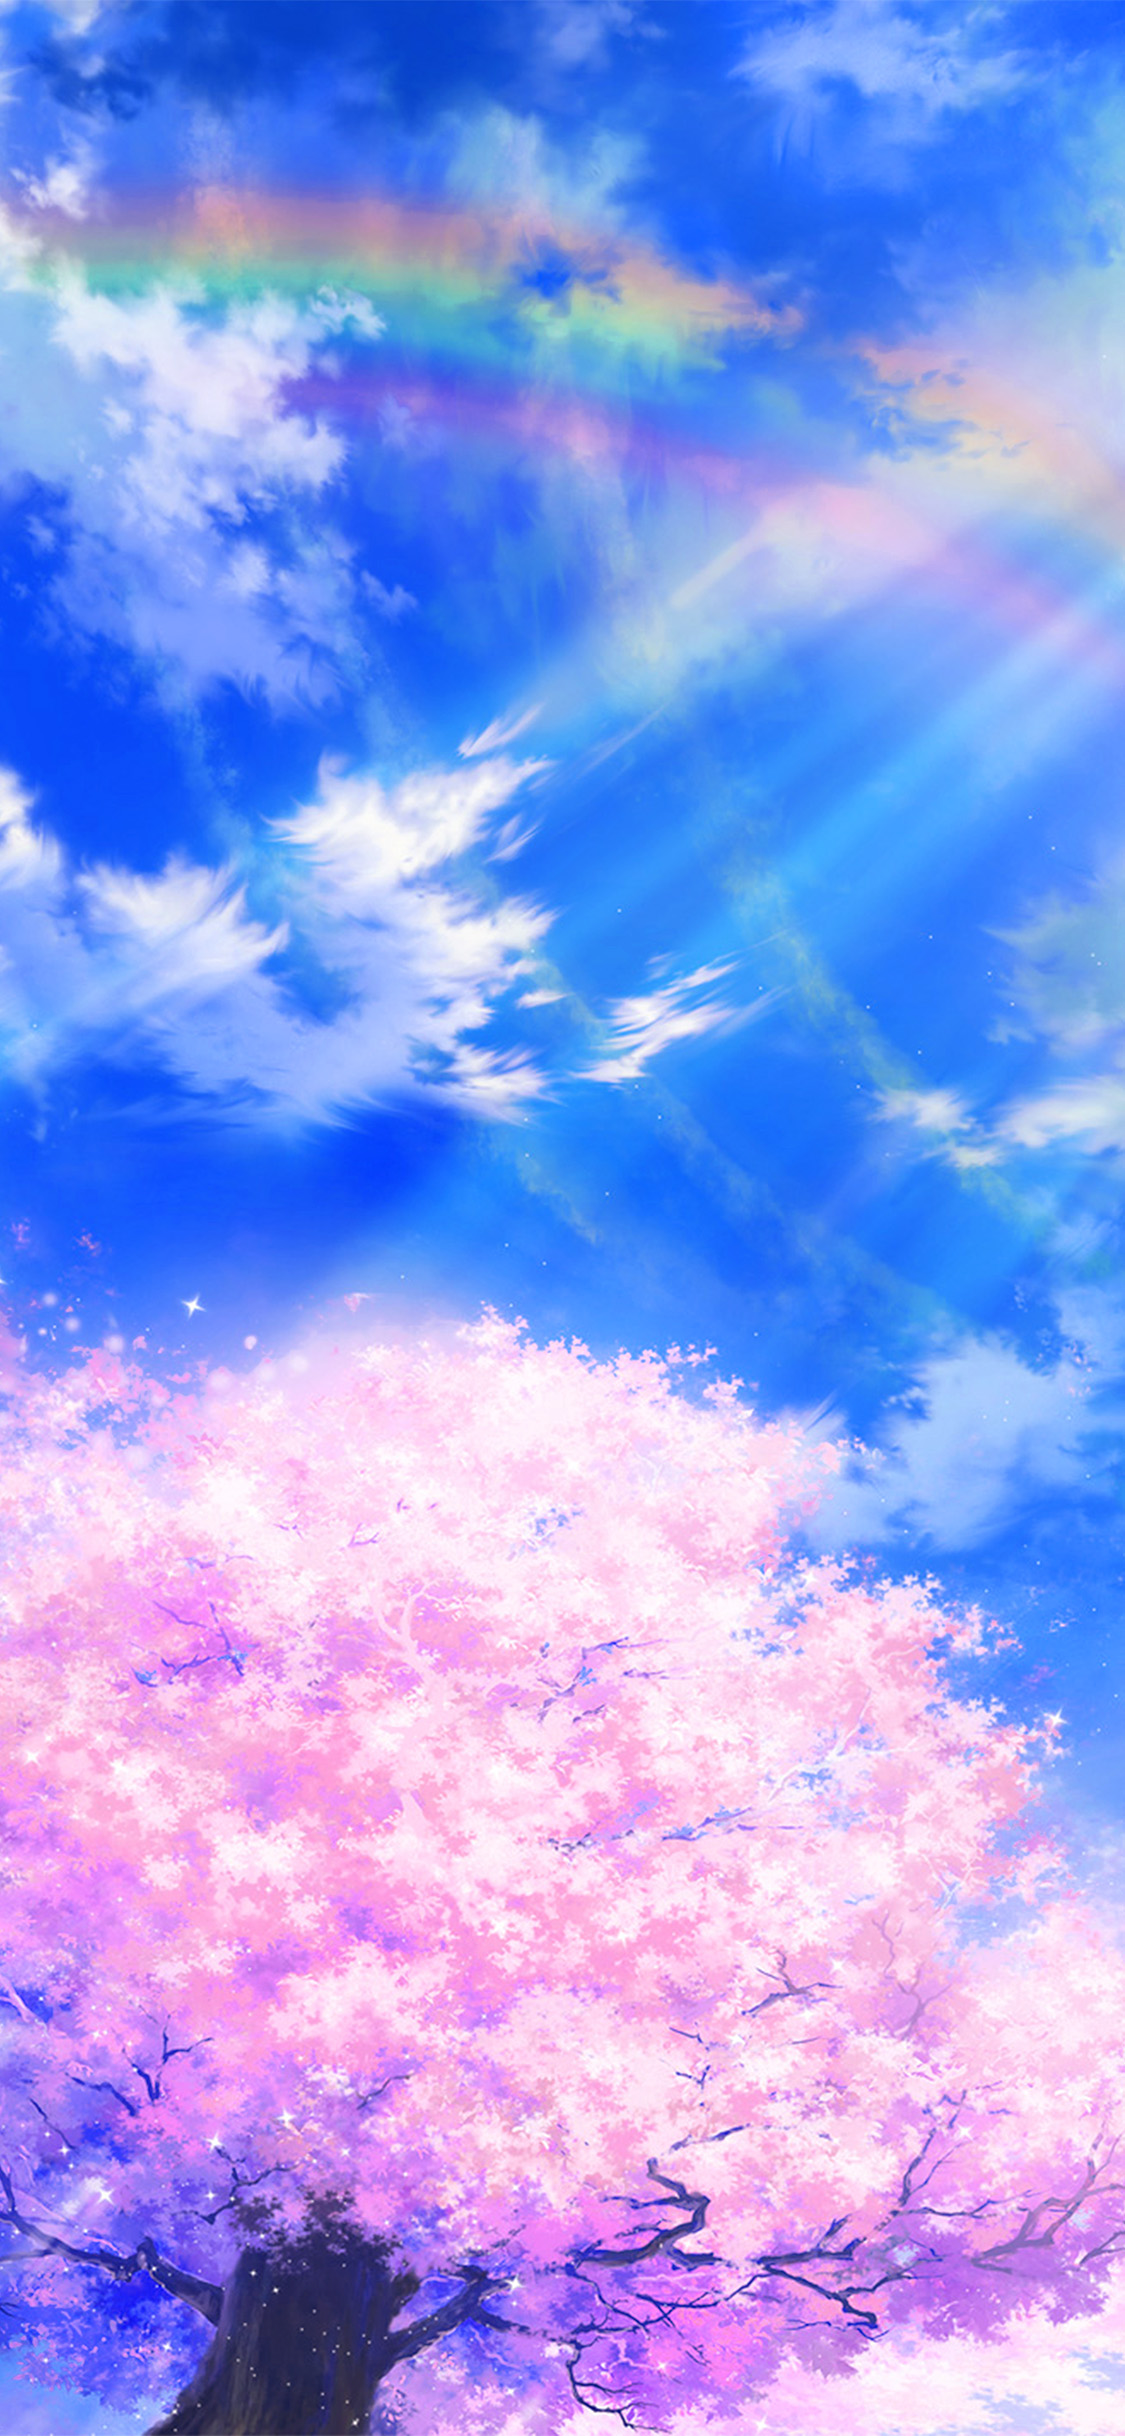 iPhone X wallpaper. anime sky cloud spring art illustration blue